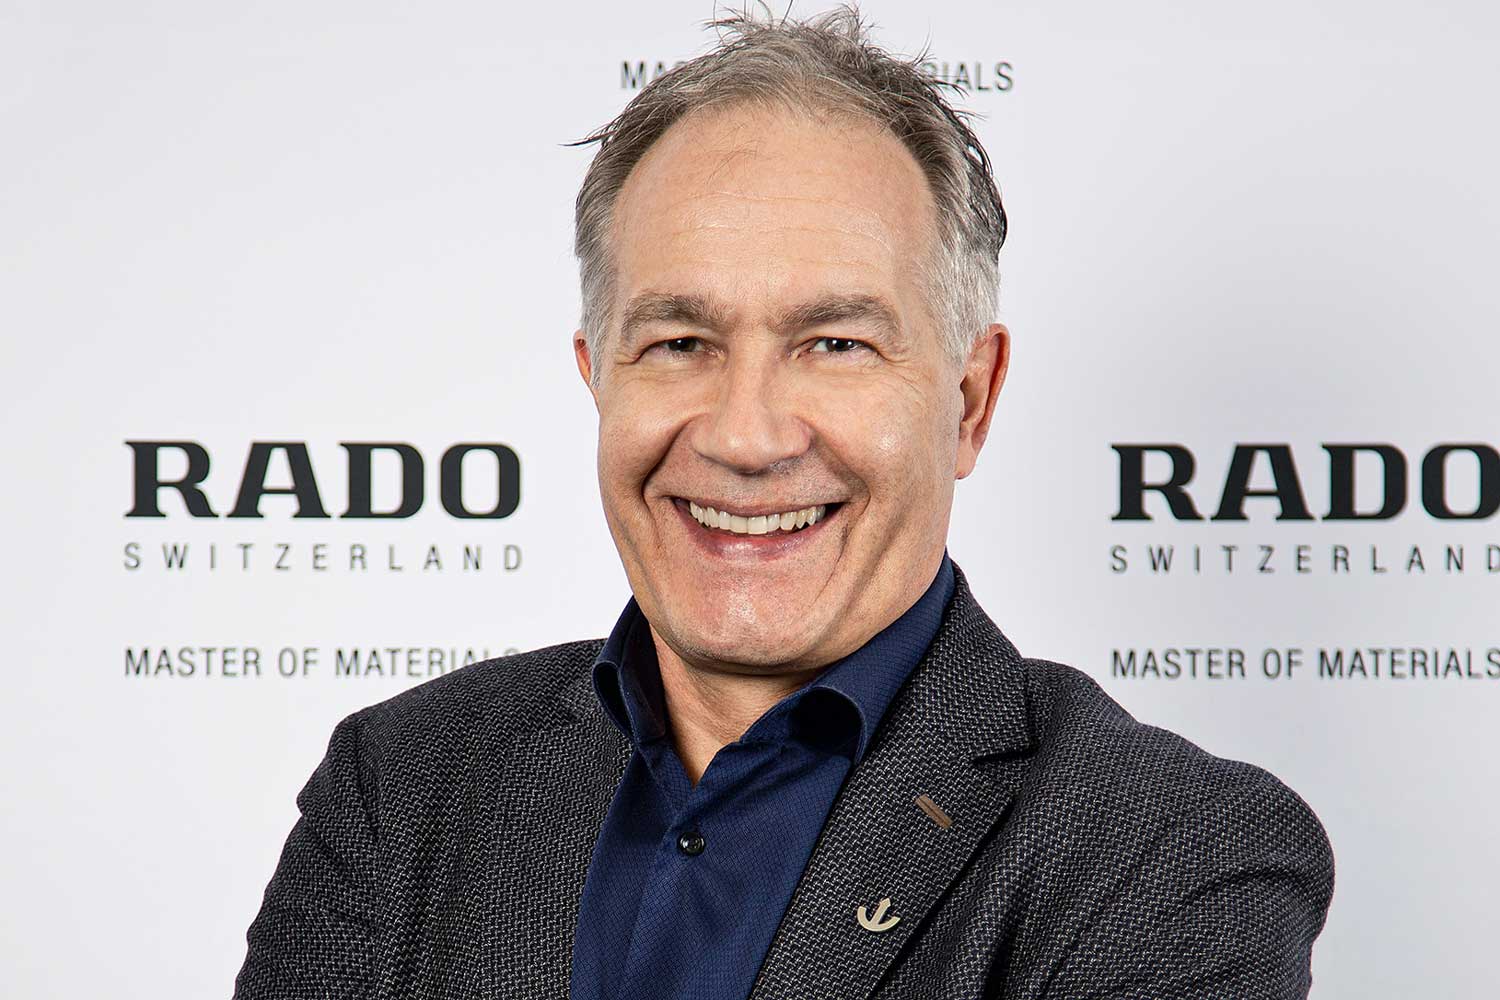 CEO of Rado, Adrian-Bosshard